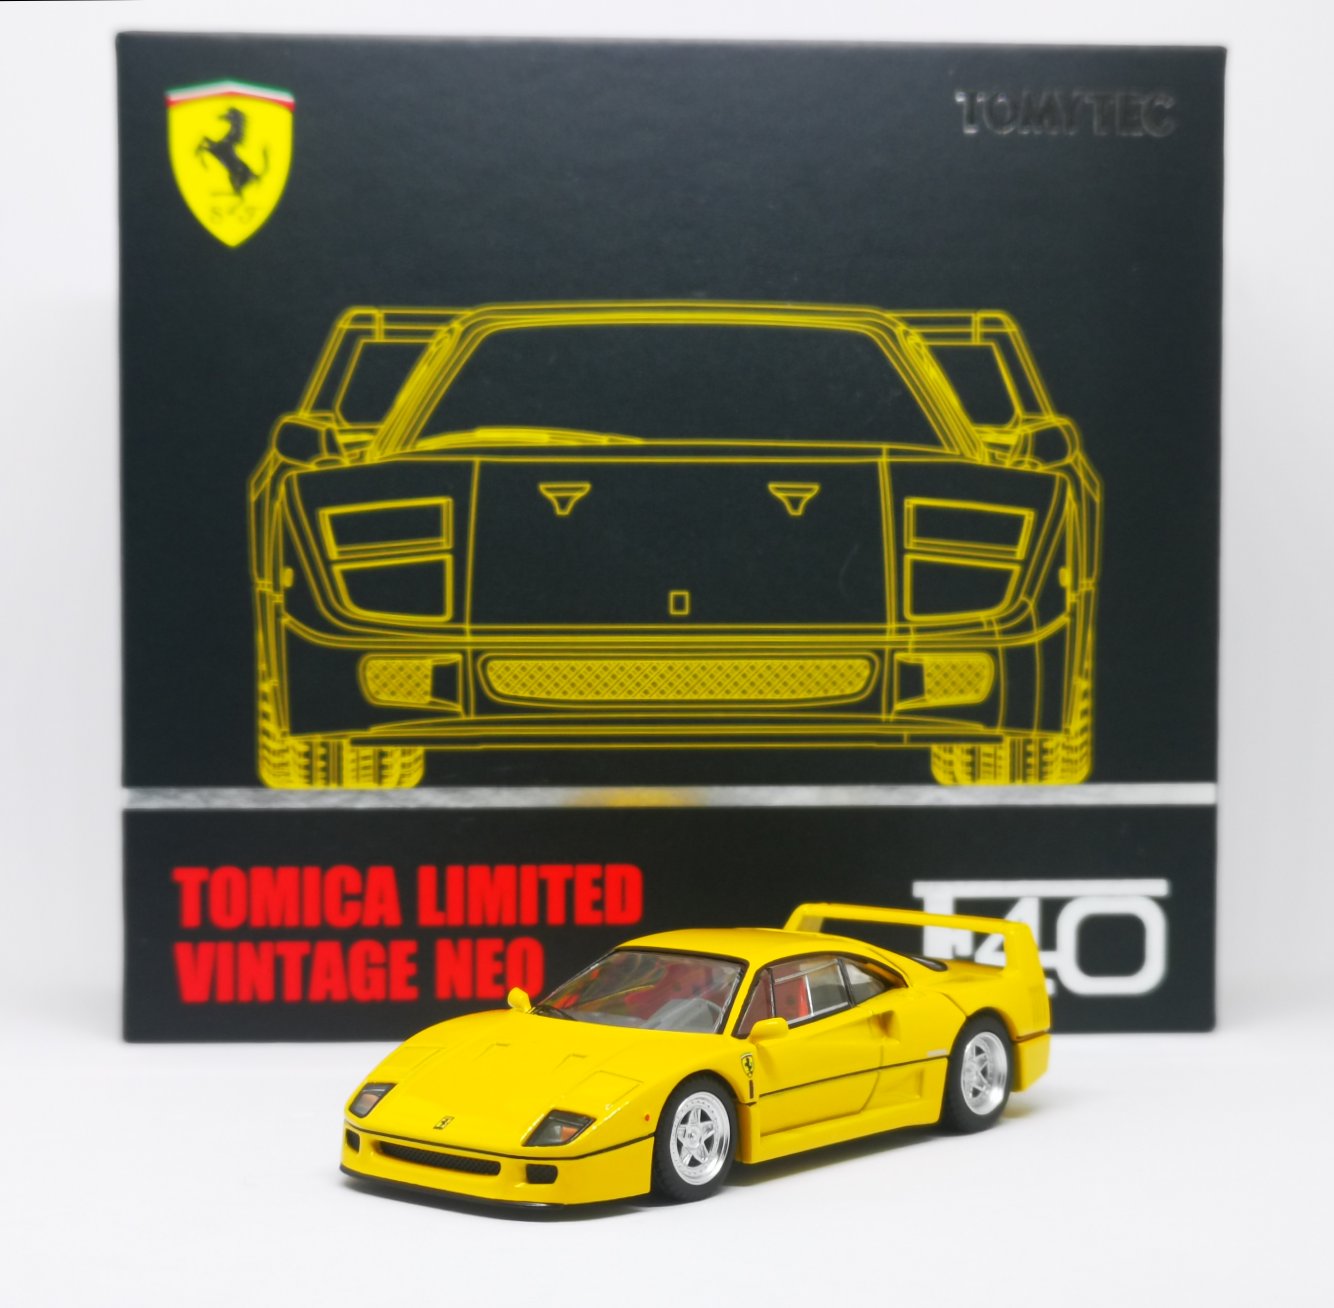 Tomica Limited Vintage Neo Ferrari F40 (Yellow) Takara Tomy